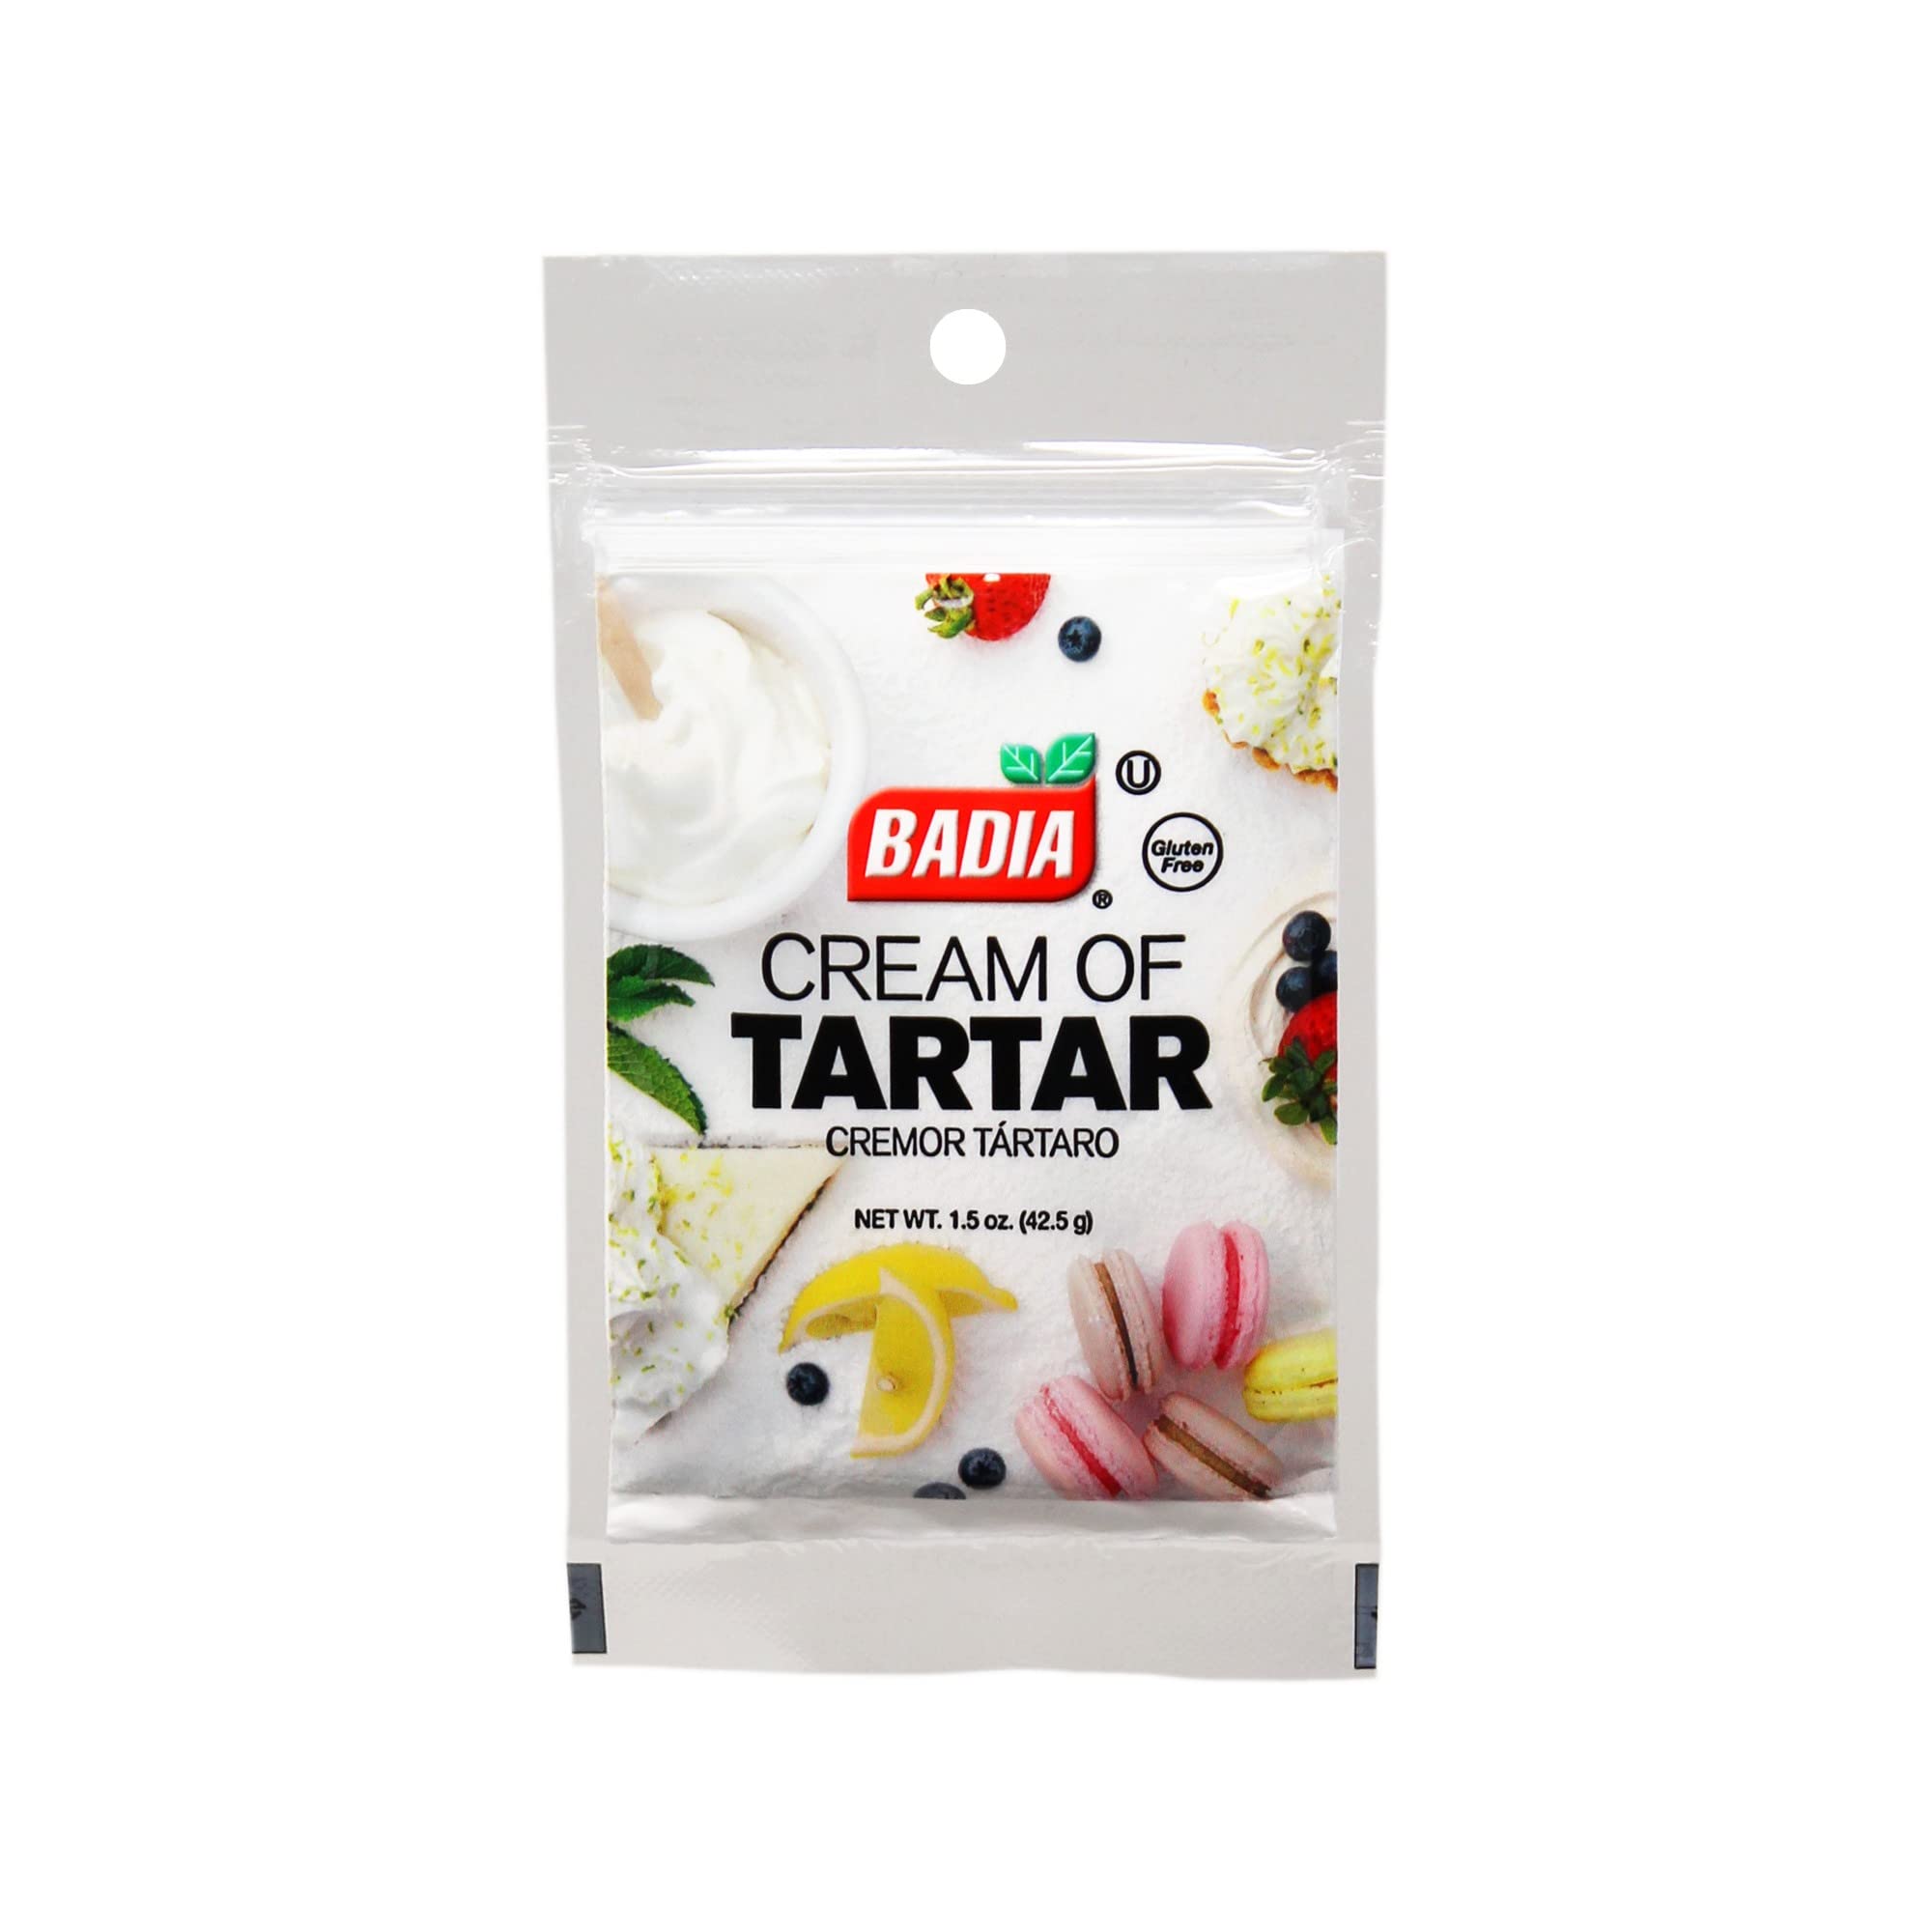 2 Bags Cream of Tartar Powder / Cremor de Tartaro Kosher 2x1.5oz EA